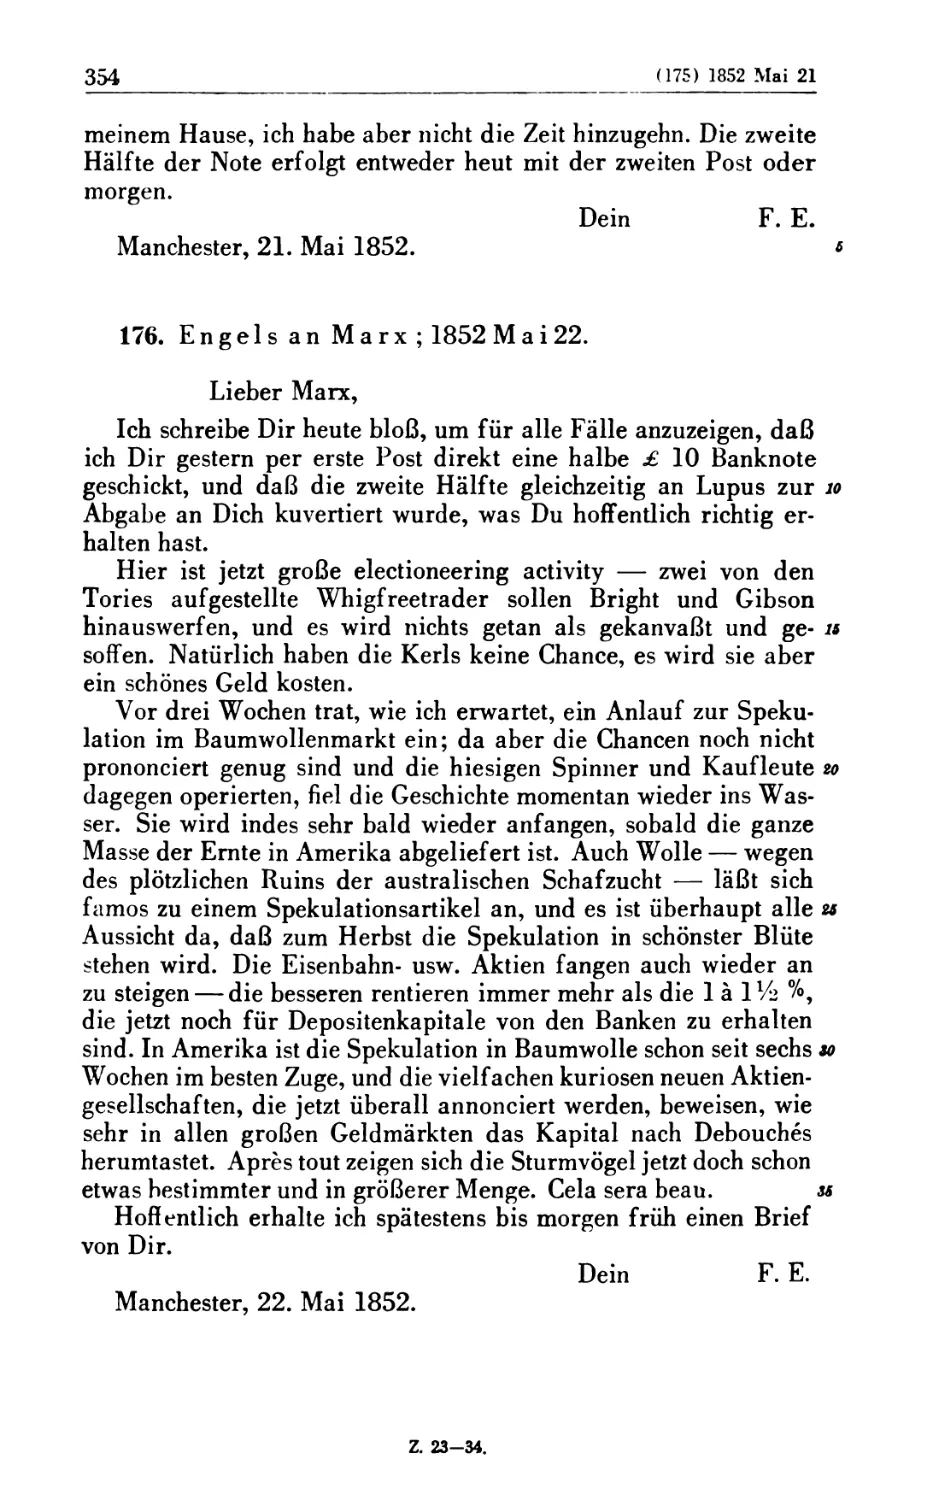 176. Engels an Marx; 1852 Mai 22